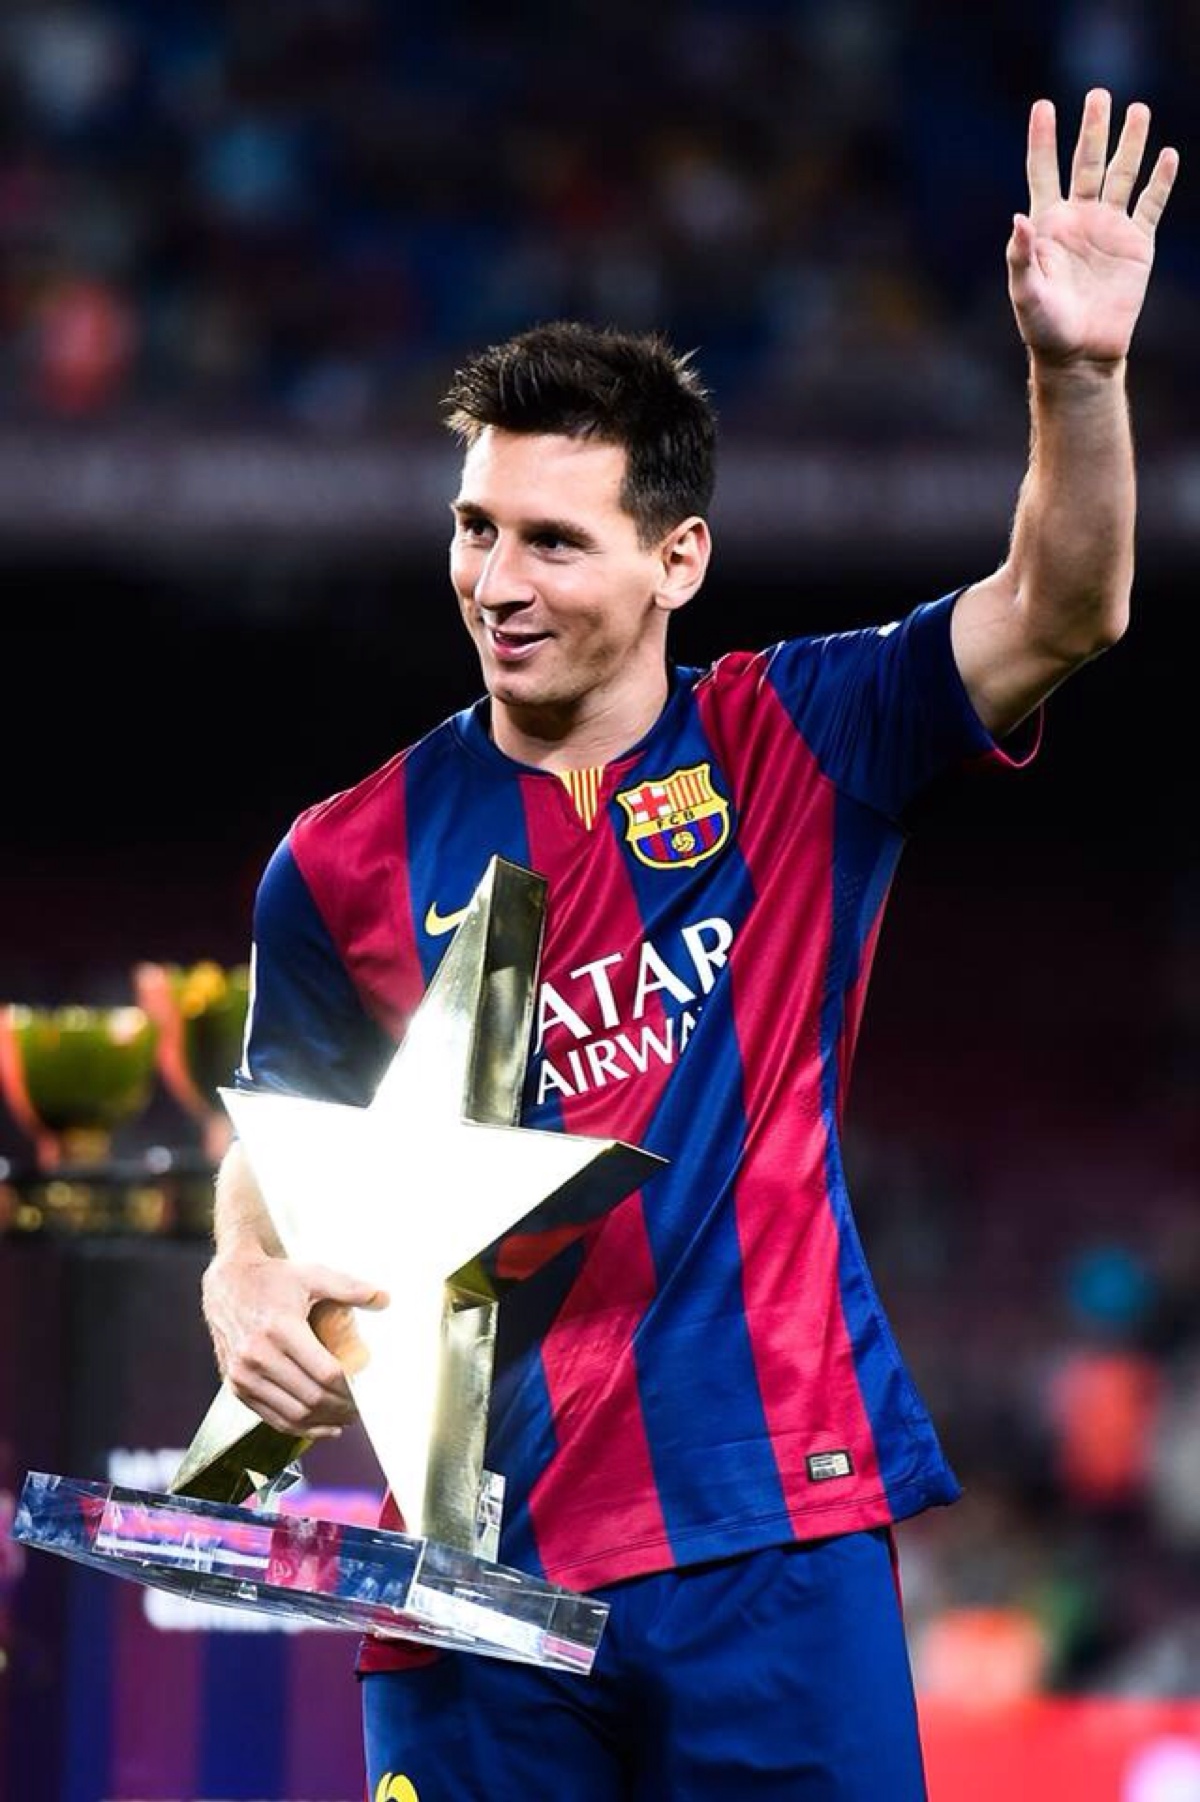 messi2014年世界杯亚军阿根廷队长金球奖获得者梅西.